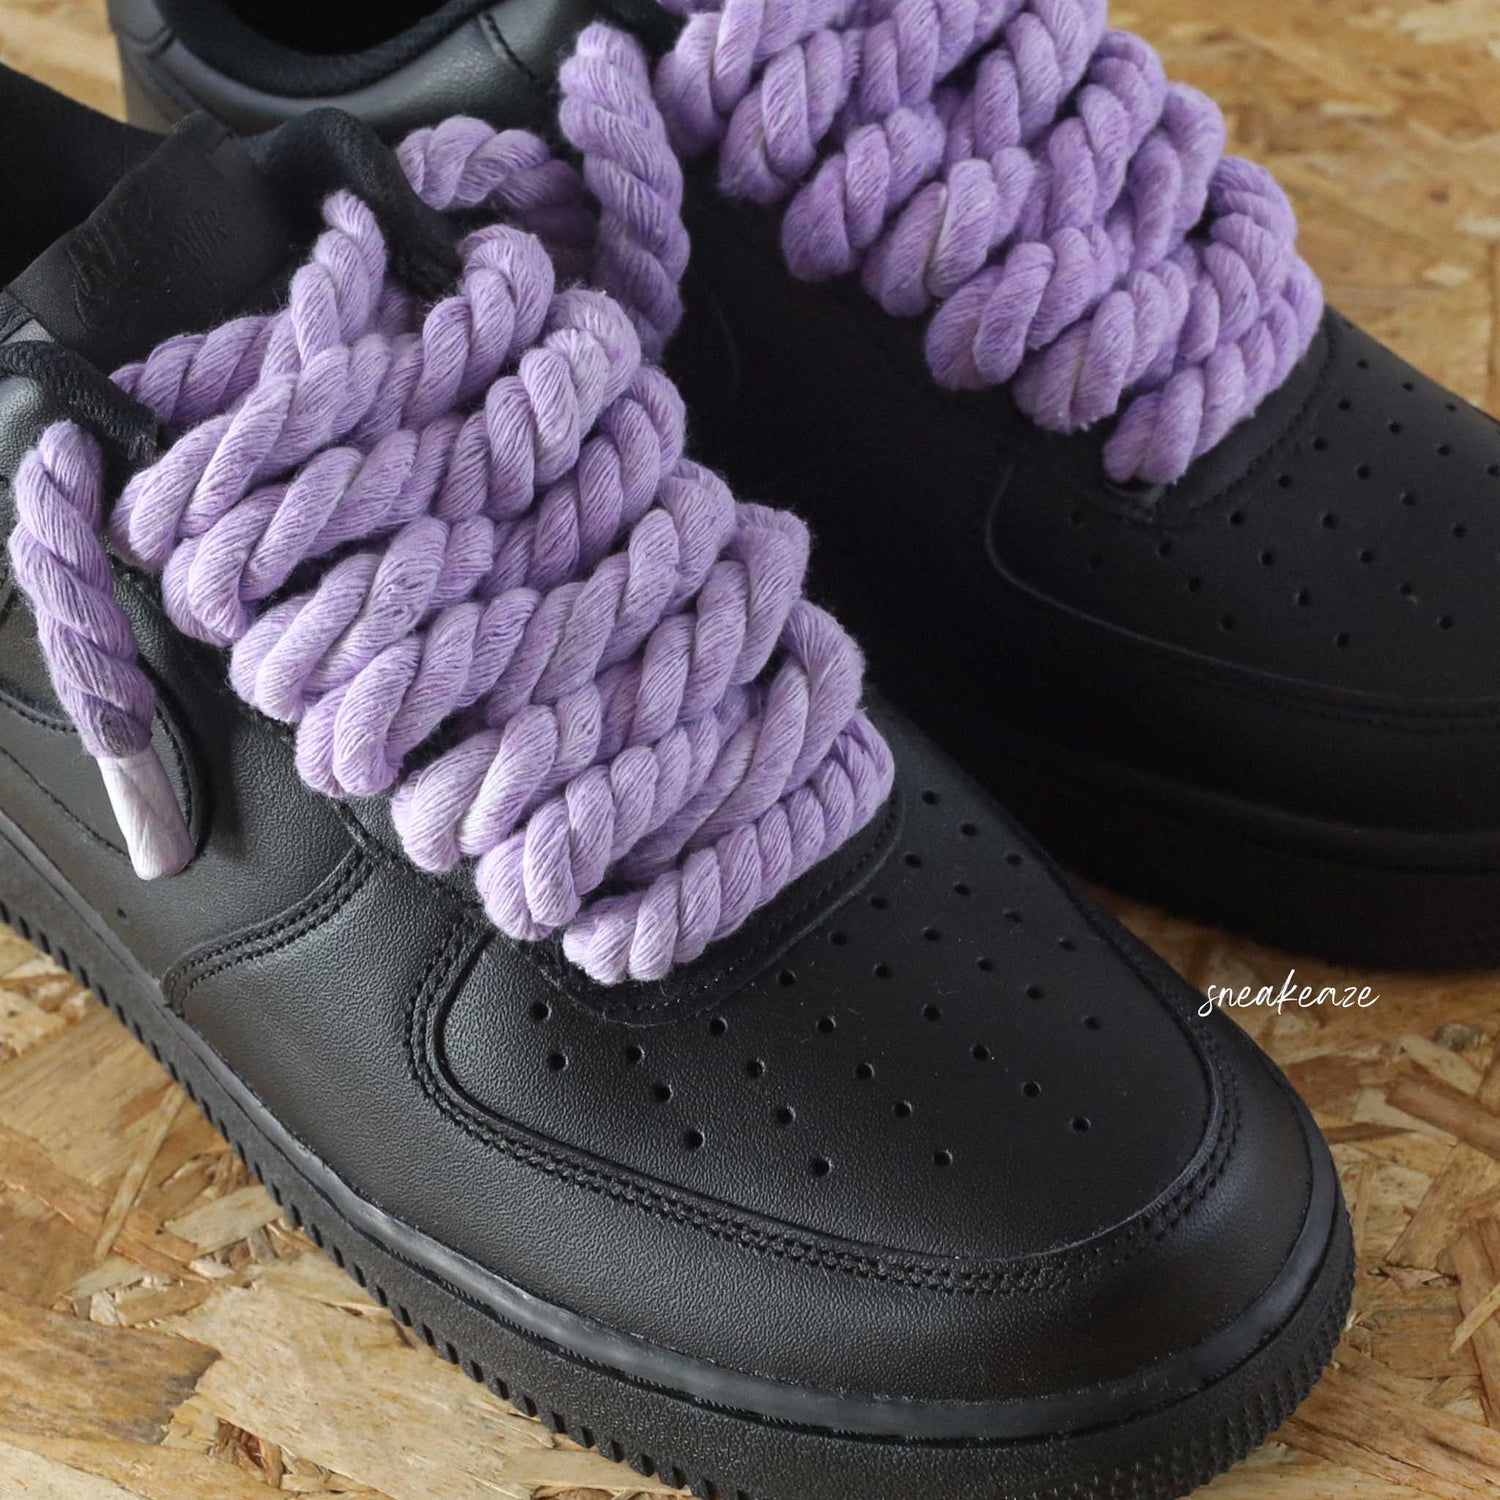 baskets nike air force 1 custom rope laces - lacets corde lila sneakeaze skz custom